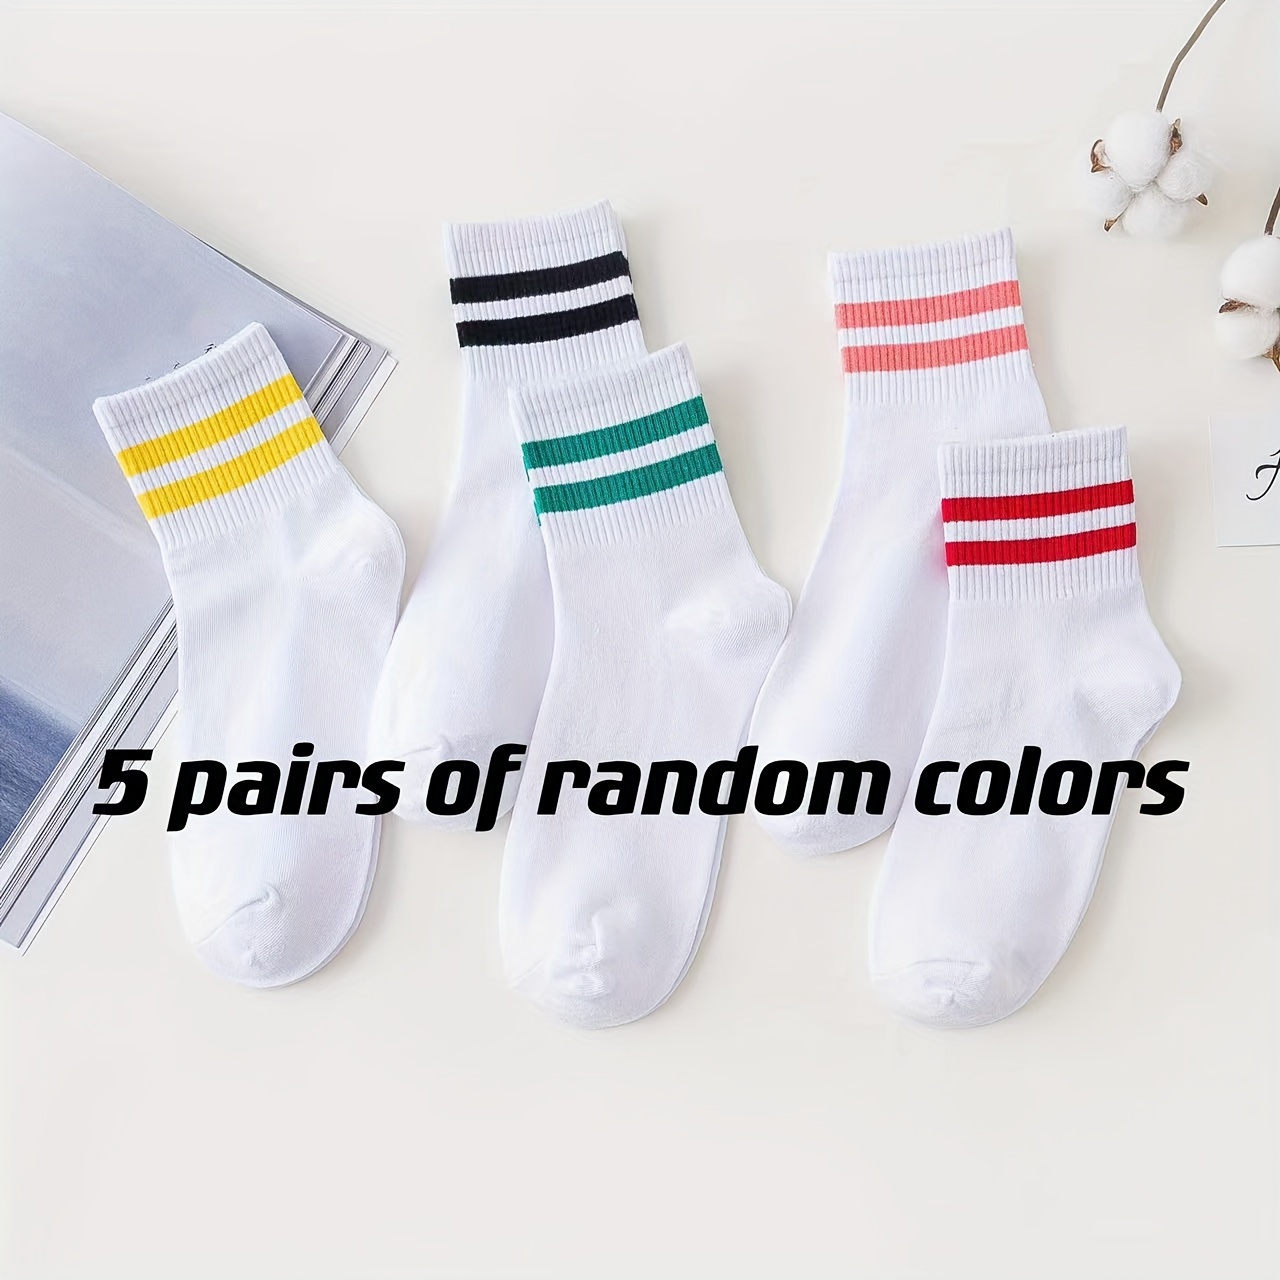 No Nonsense Women's Quarter Length White Socks Soft & Breathable